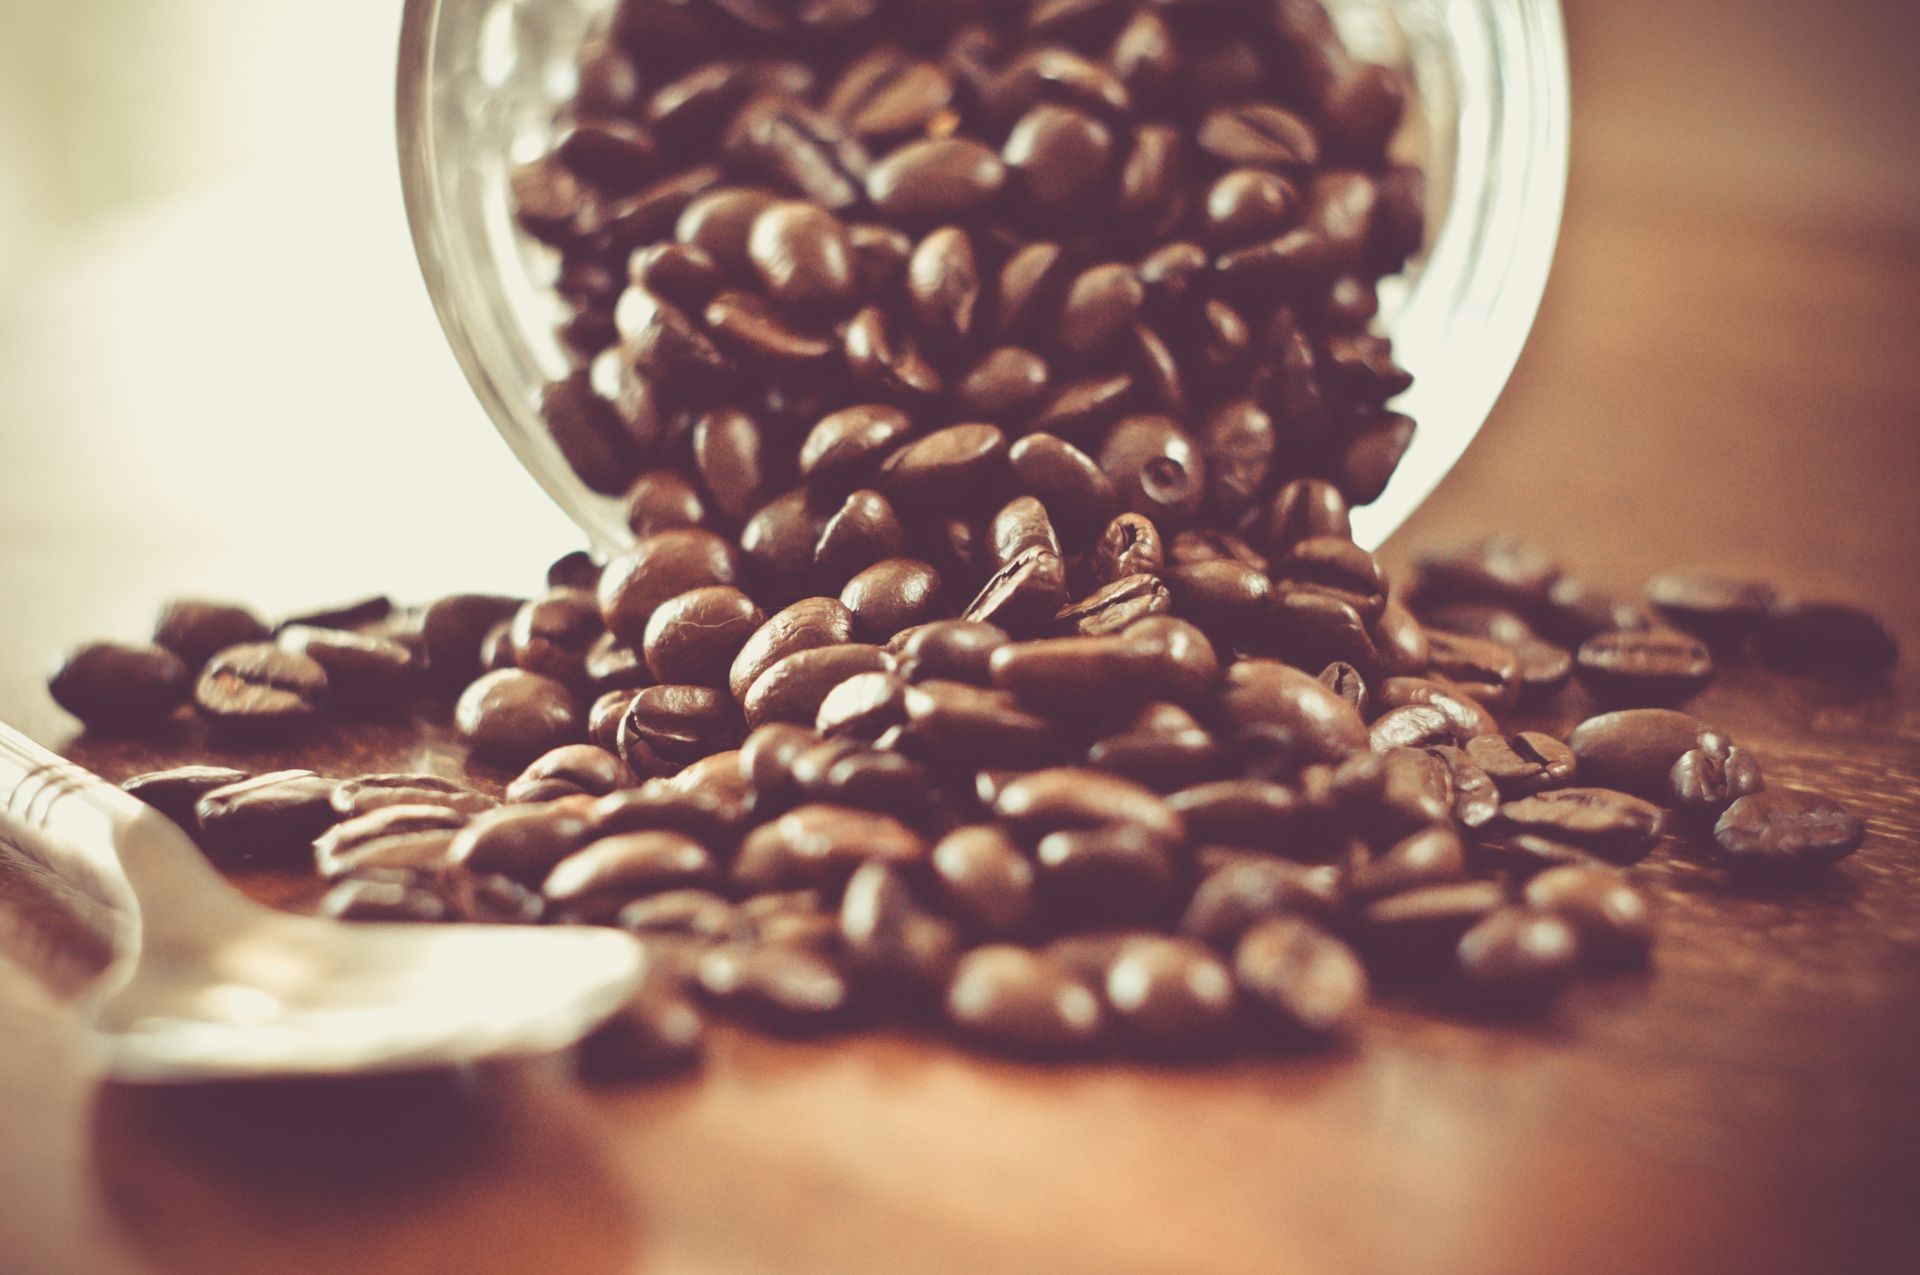 coffee drink food dawn espresso caffeine dark wood cup breakfast desktop bean cereal seed